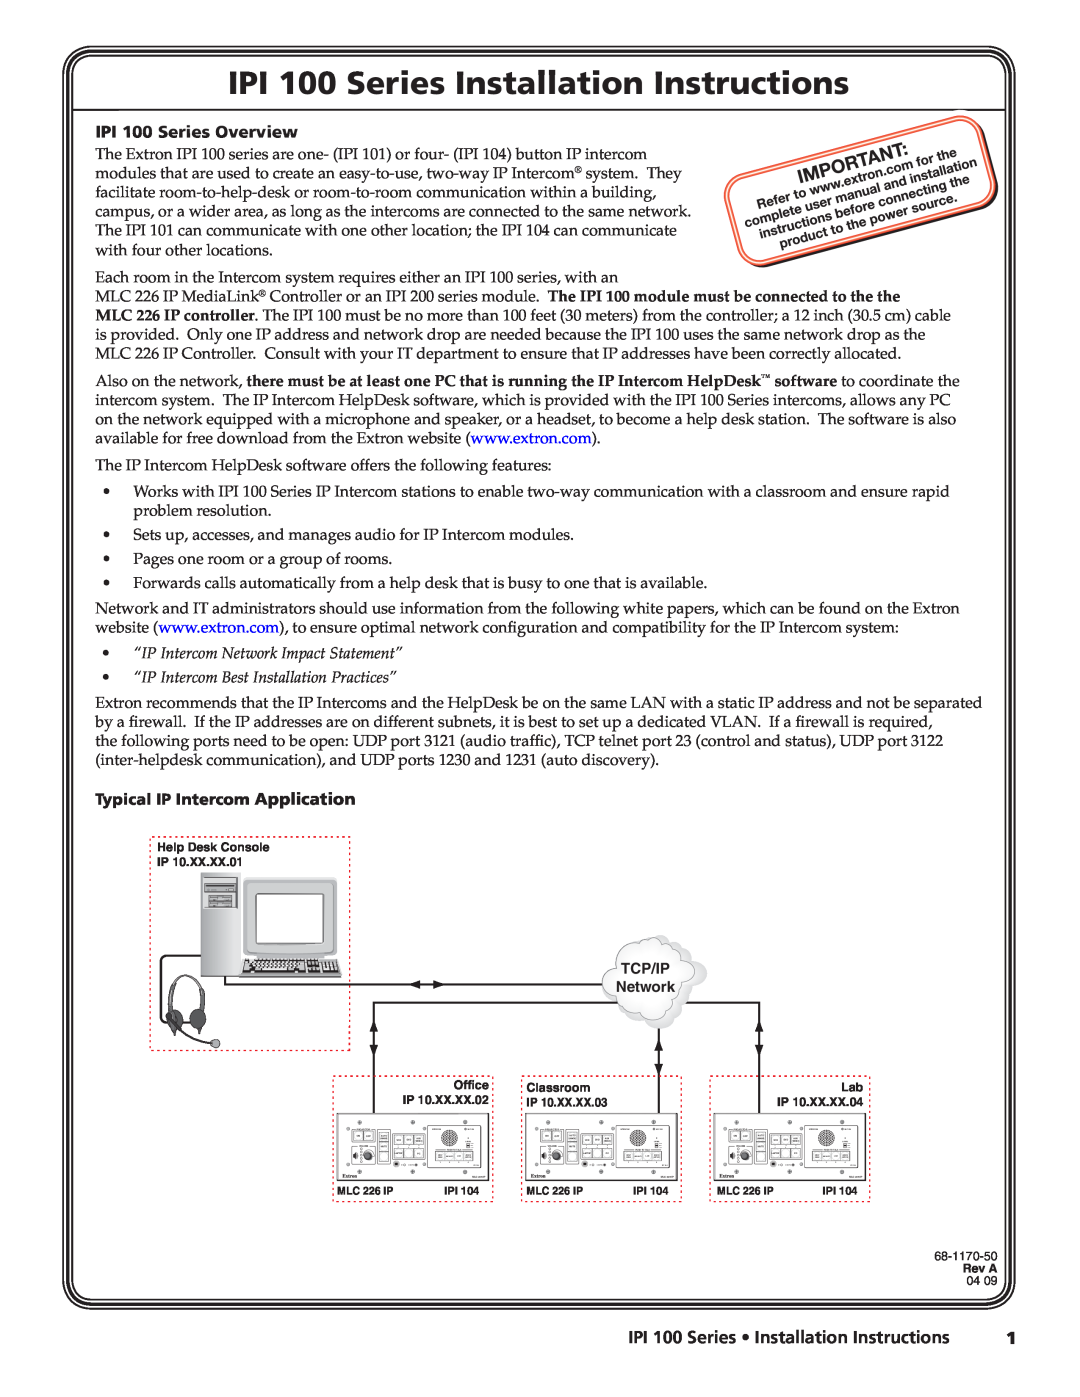 Extron electronic manual MediaLink IP Intercom Interfaces, IPI 100 and IPI 200 Series, 68-1170-01 Rev. D 09, Push To 